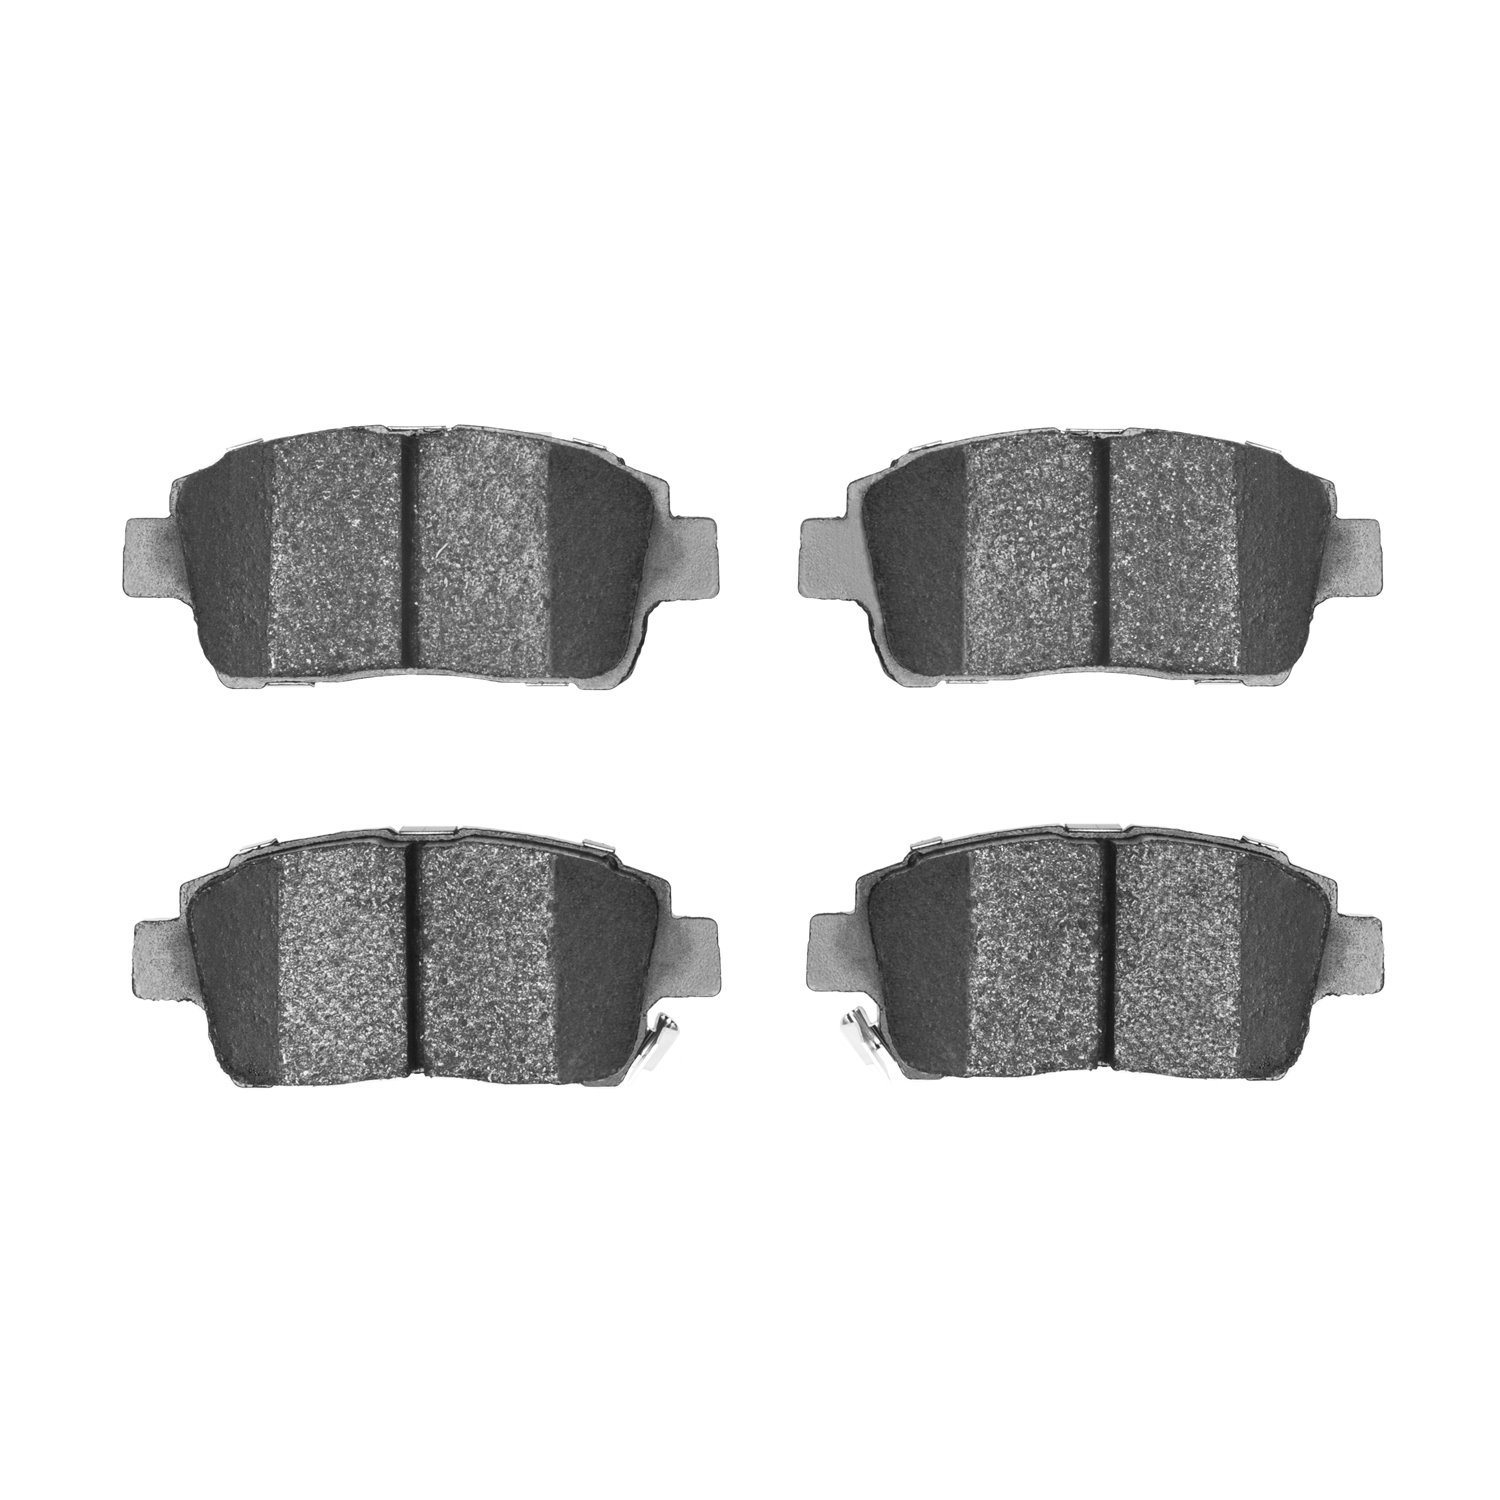 Semi-Metallic Brake Pads, 2000-2015 Fits Multiple Makes/Models, Position: Front